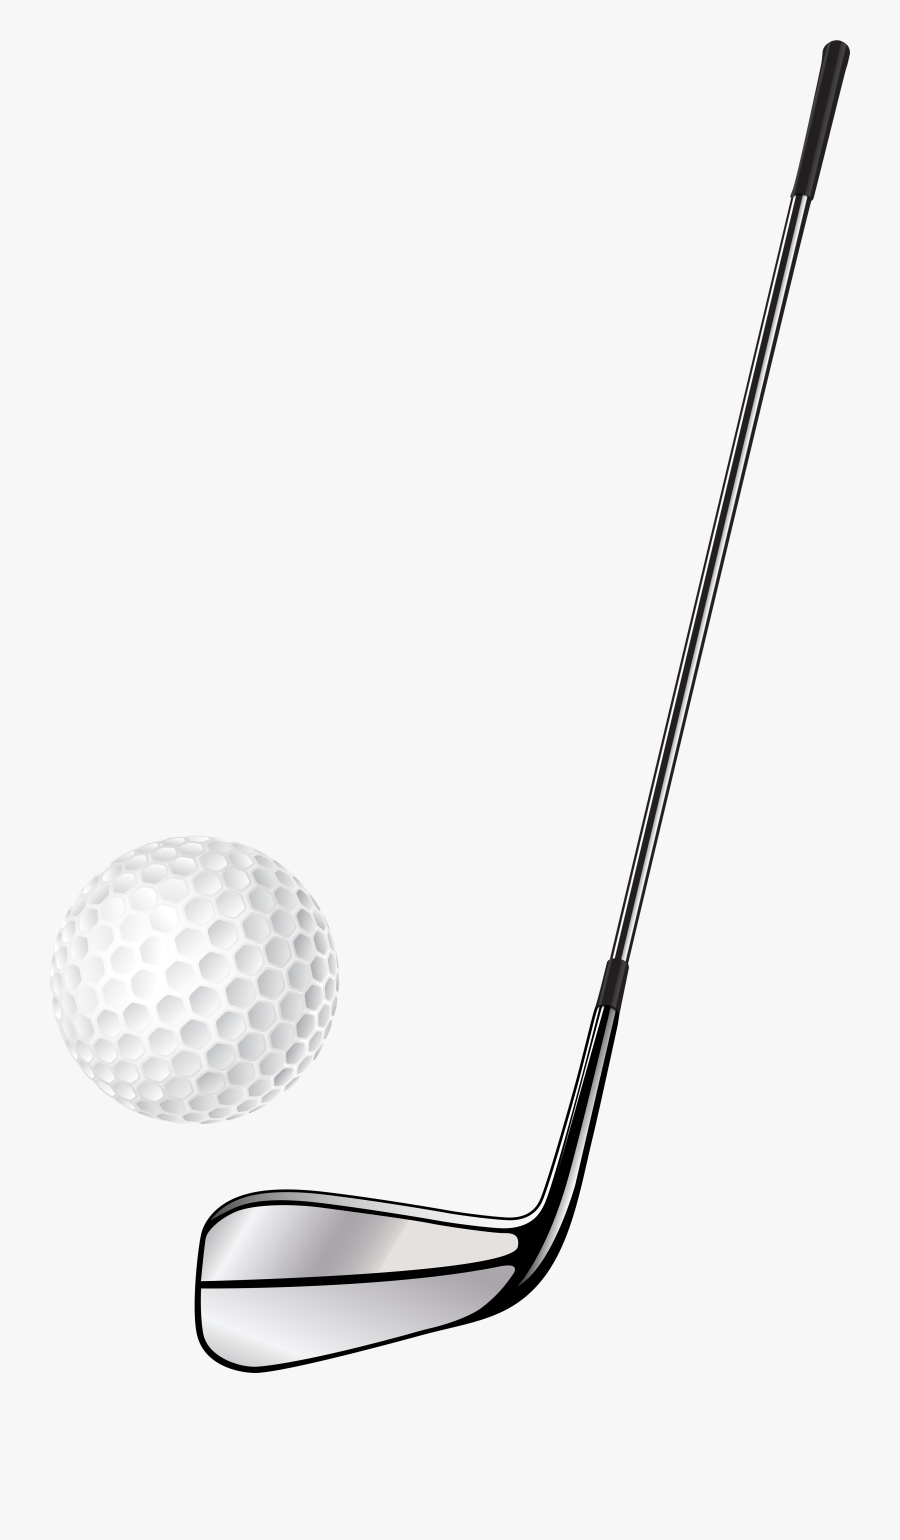 Golf Club Stick And Ball Png Clip Art - Golf Stick And Ball, Transparent Clipart